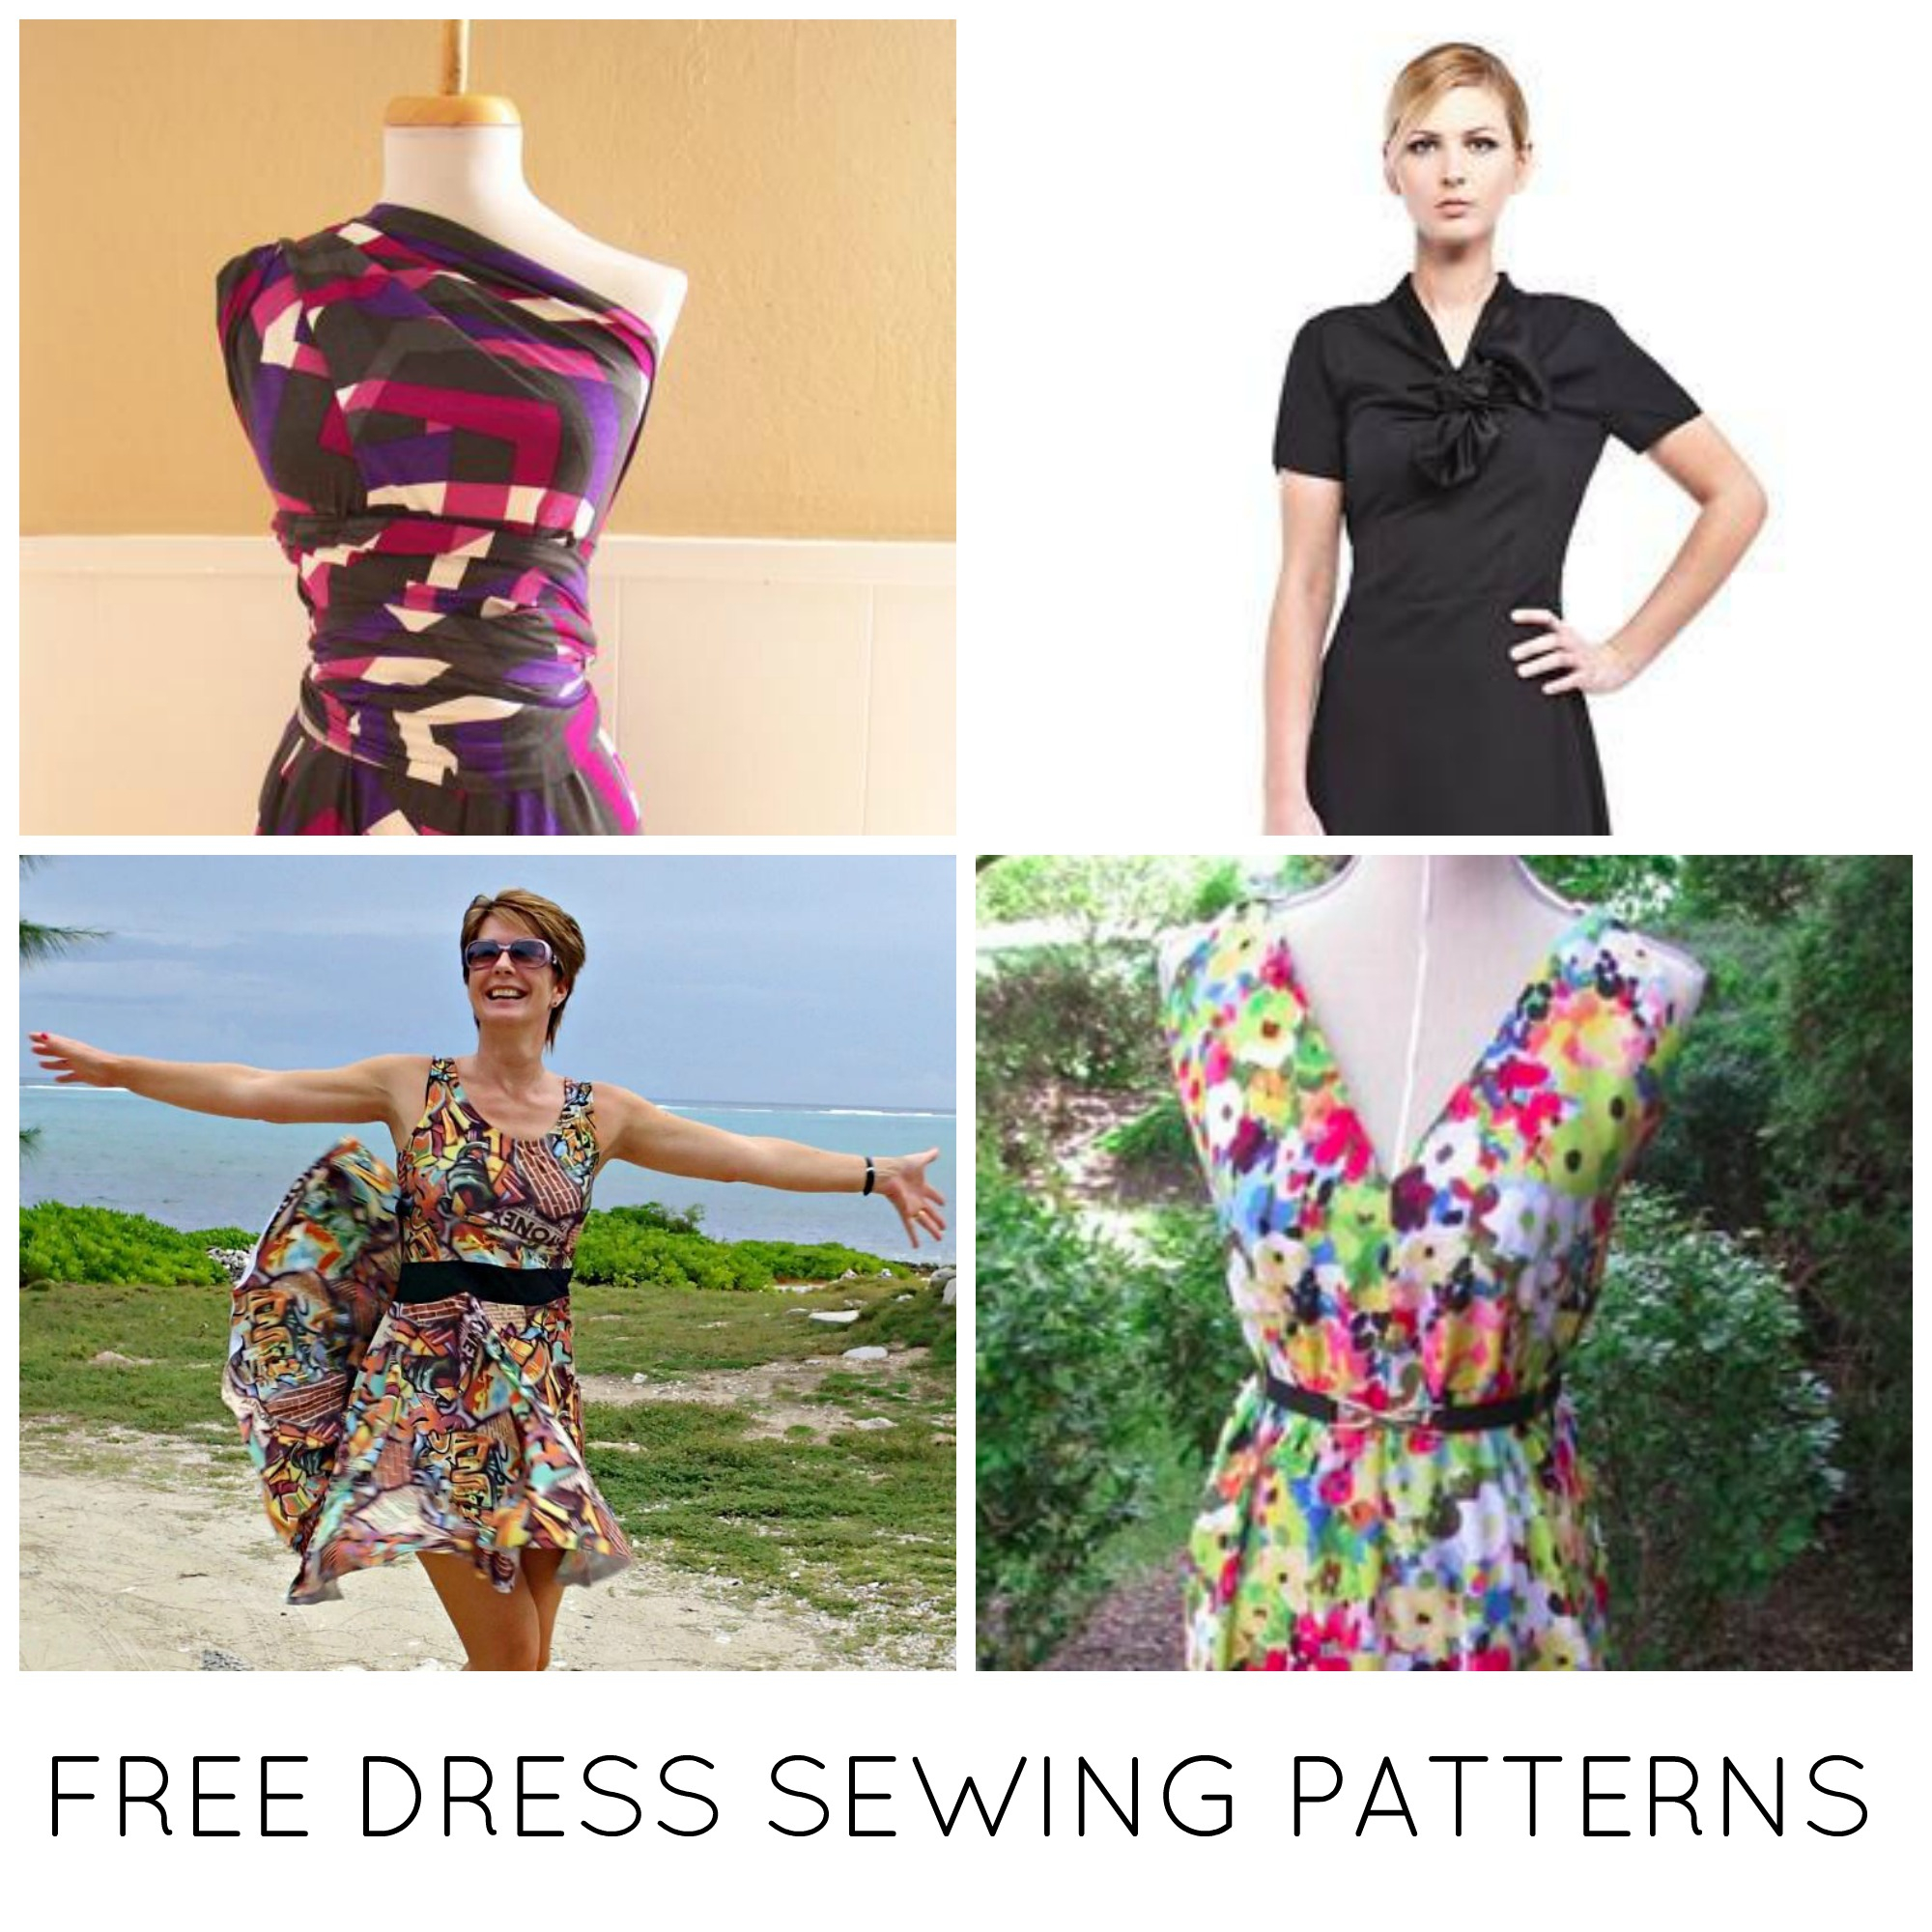 Jersey Knit Skirt Pattern 10 Free Dress Sewing Patterns Youll Love